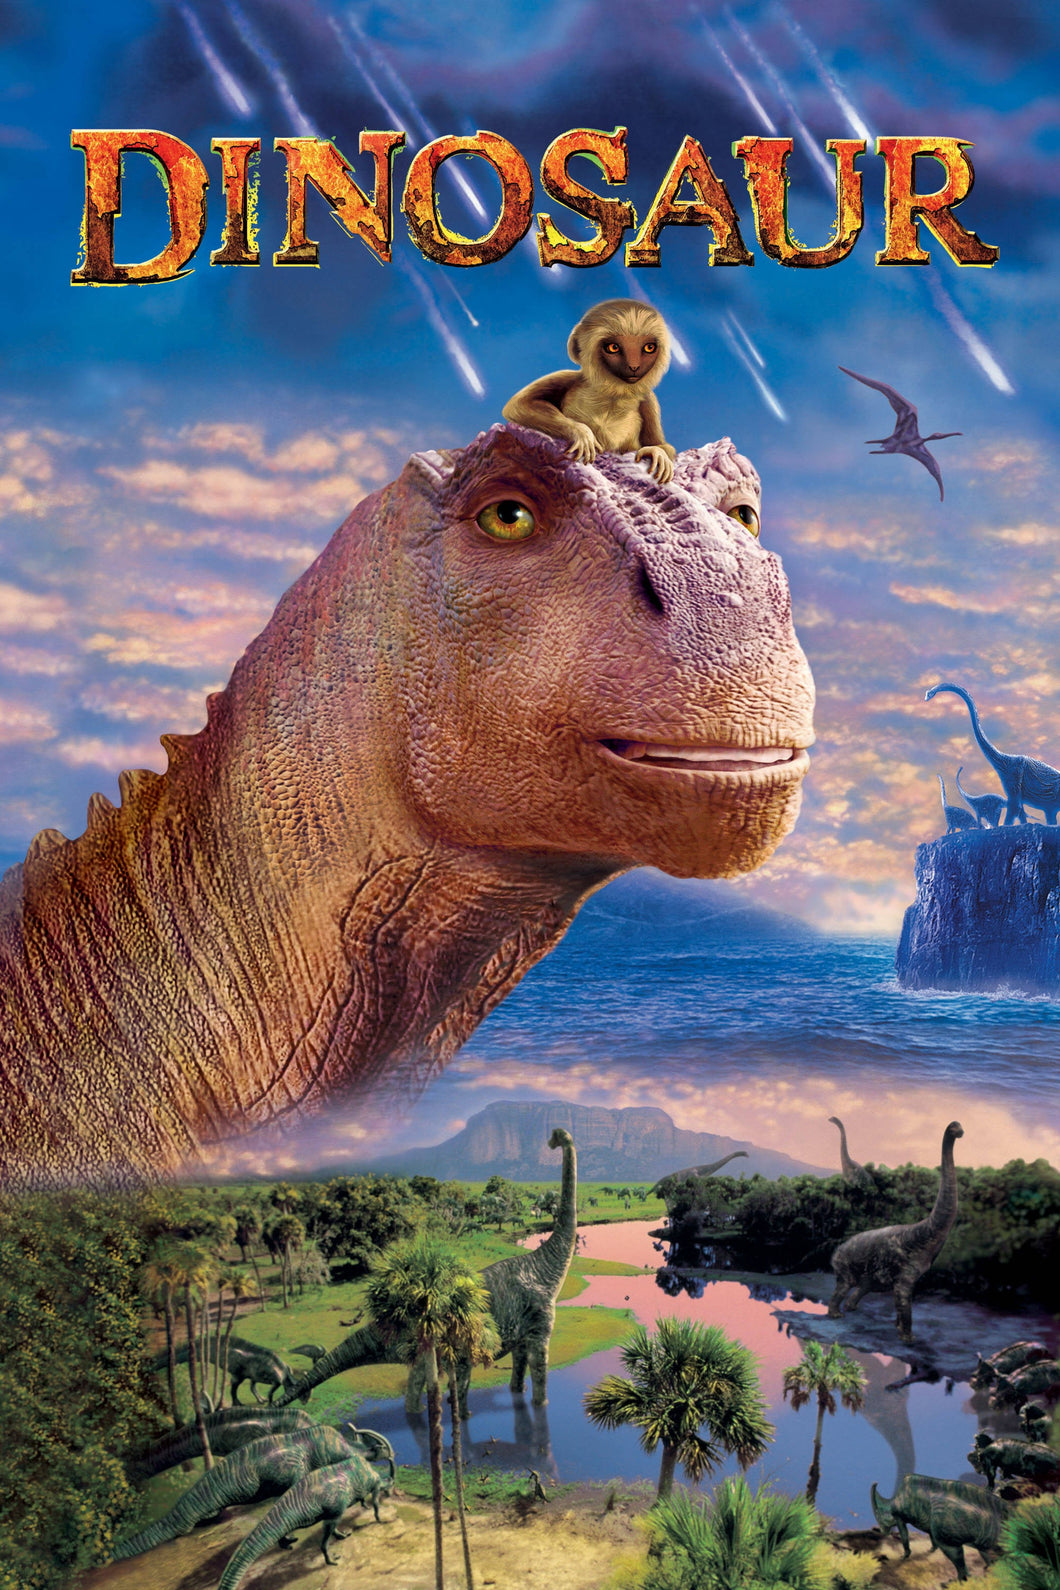 Dinosaur (2000) Movie Poster Framed or Unframed Glossy Poster Free UK Shipping!!!